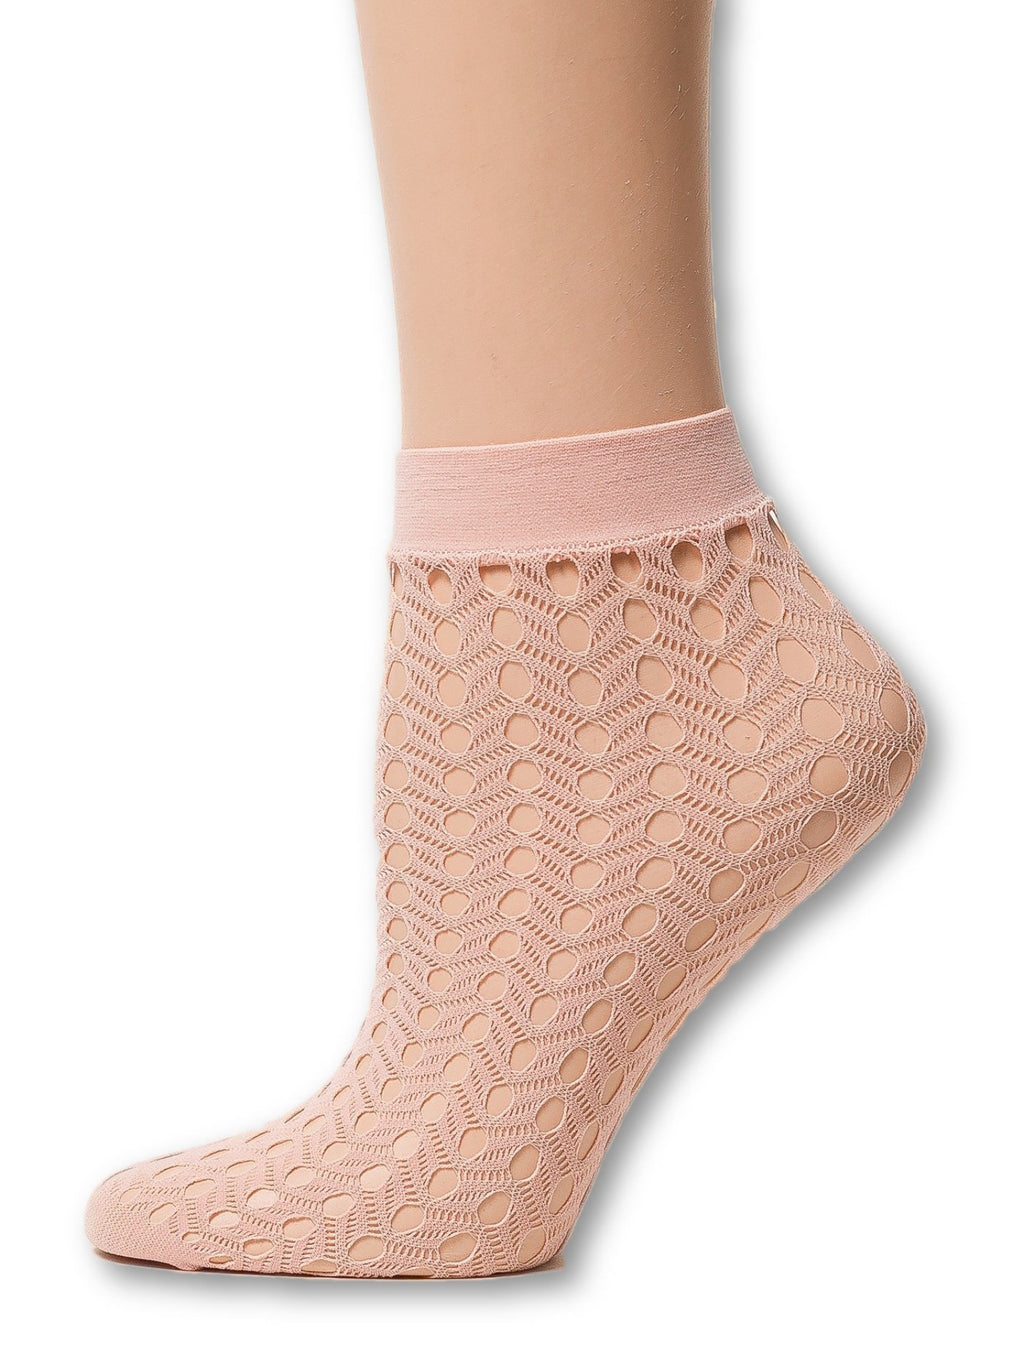 Classy Holes Mesh Socks - Global Trendz Fashion®